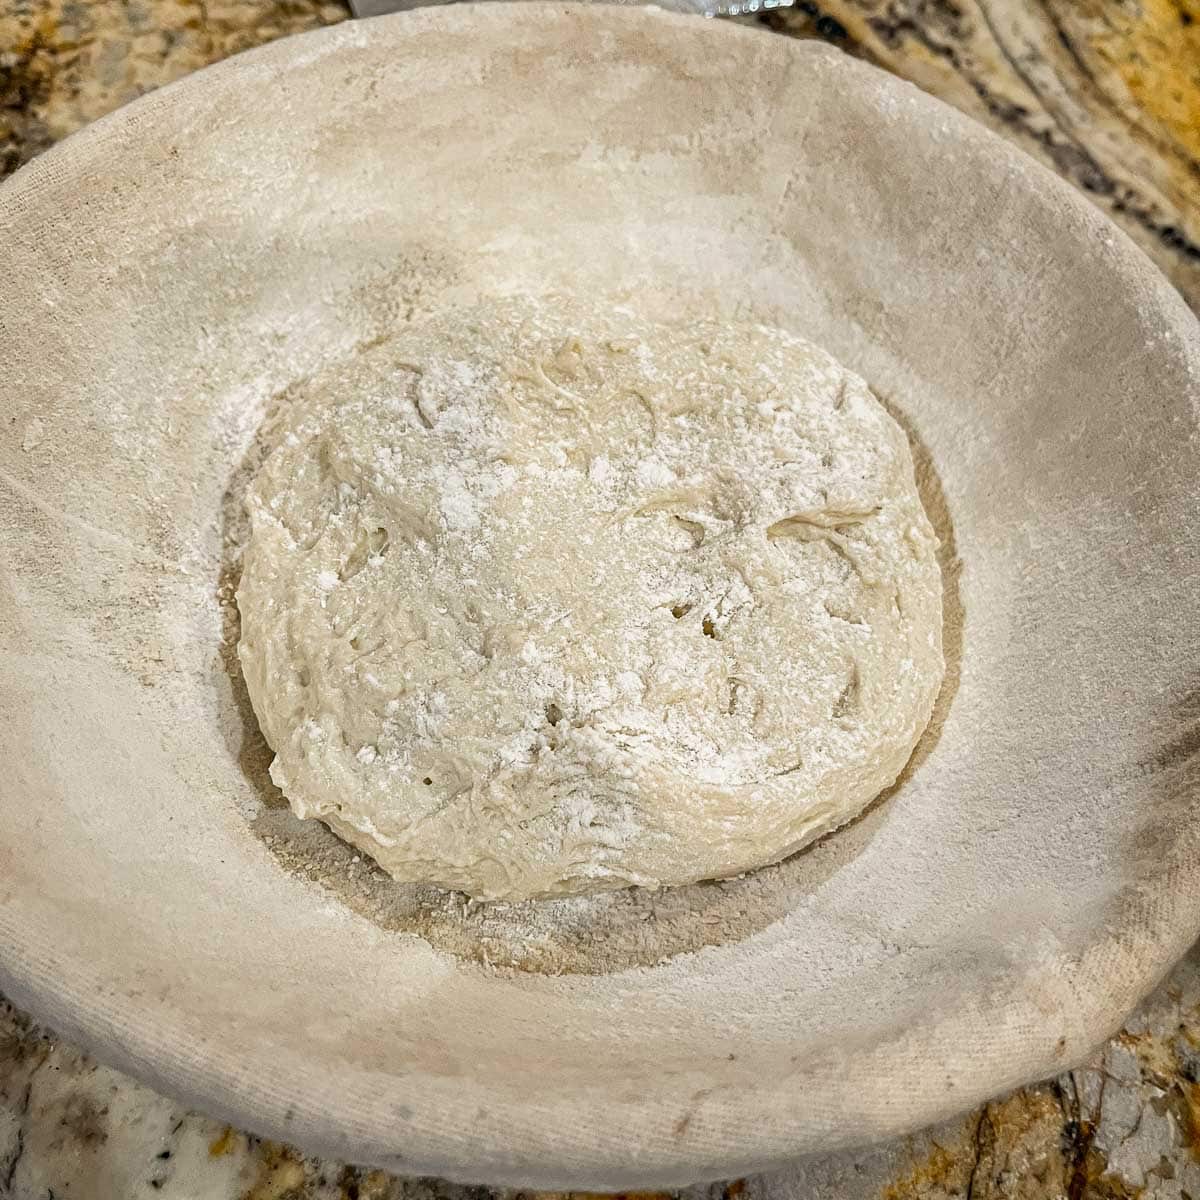 sourdough bread dough in a basket